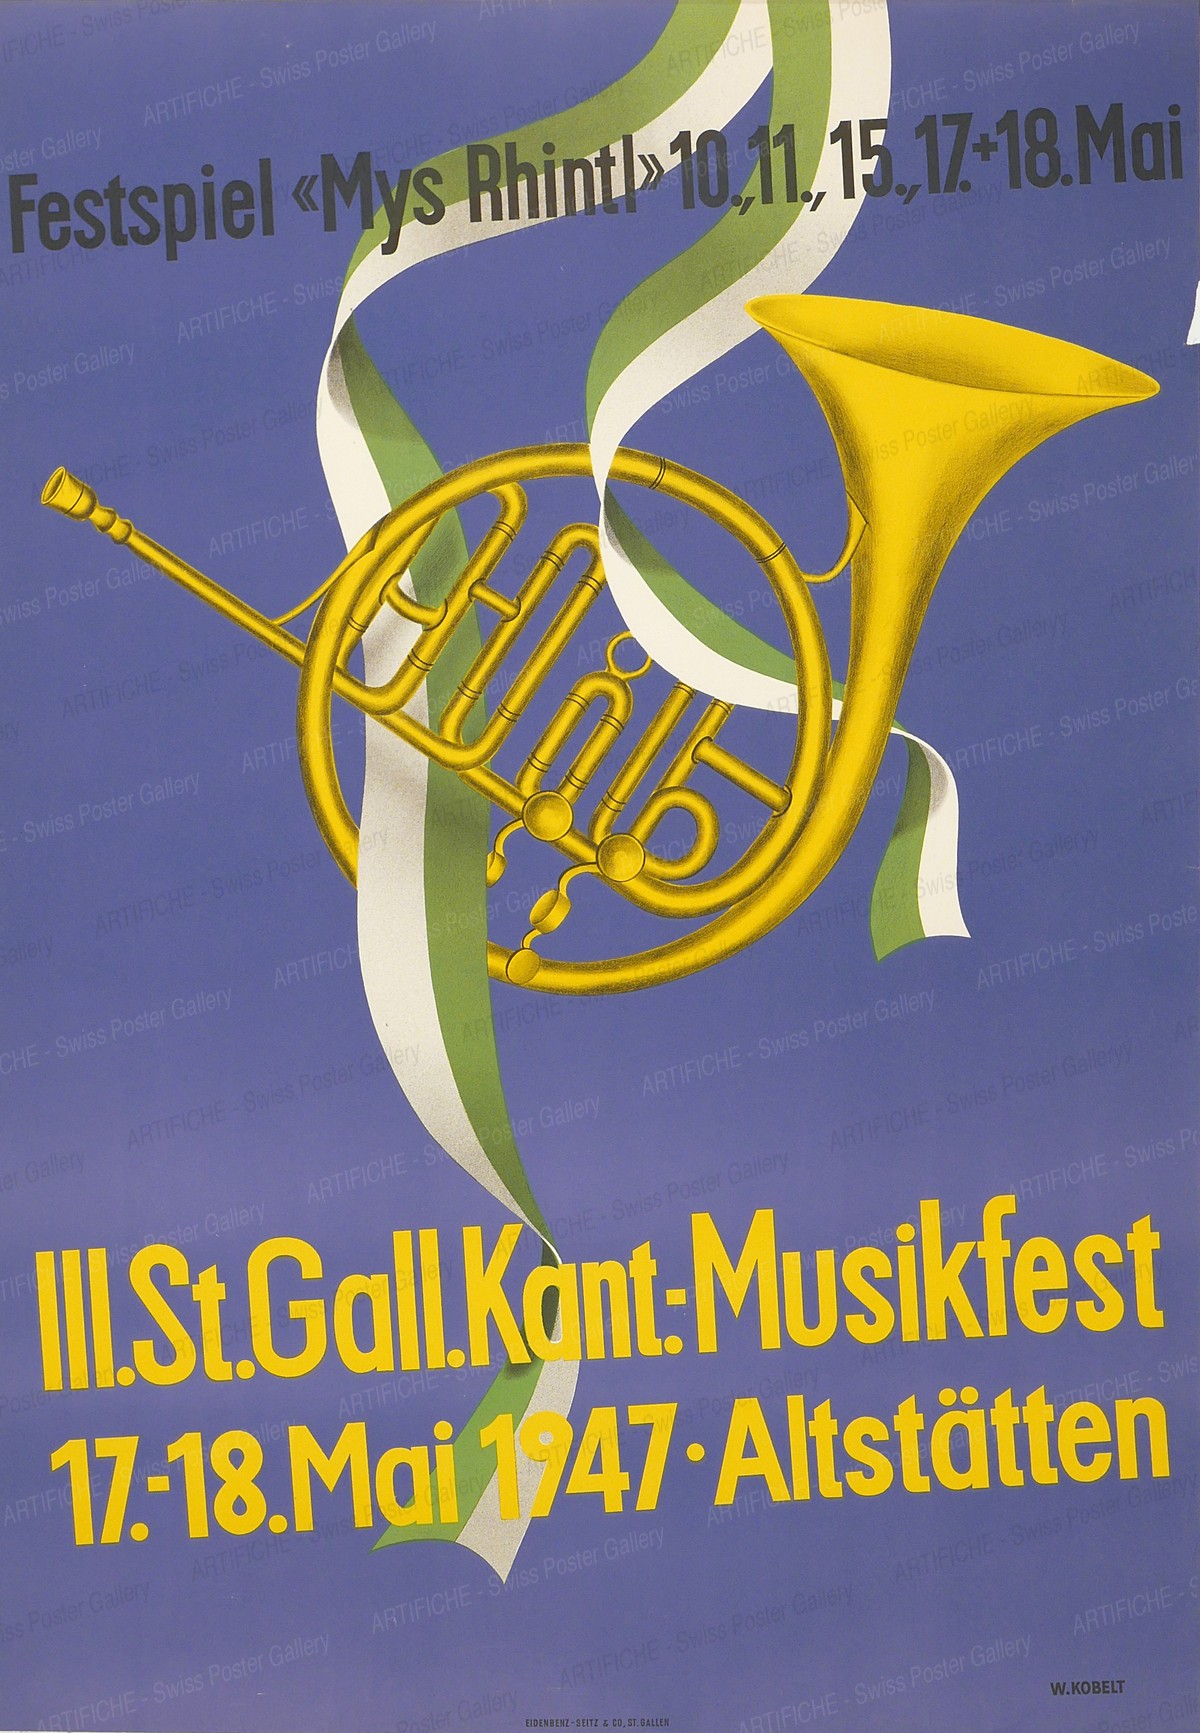 III. St. Gall. Kant.-Musikfest 17.-18. Mai 1947 Altstätten – Festspiel “Mys Rhintl”, Willy Kobelt